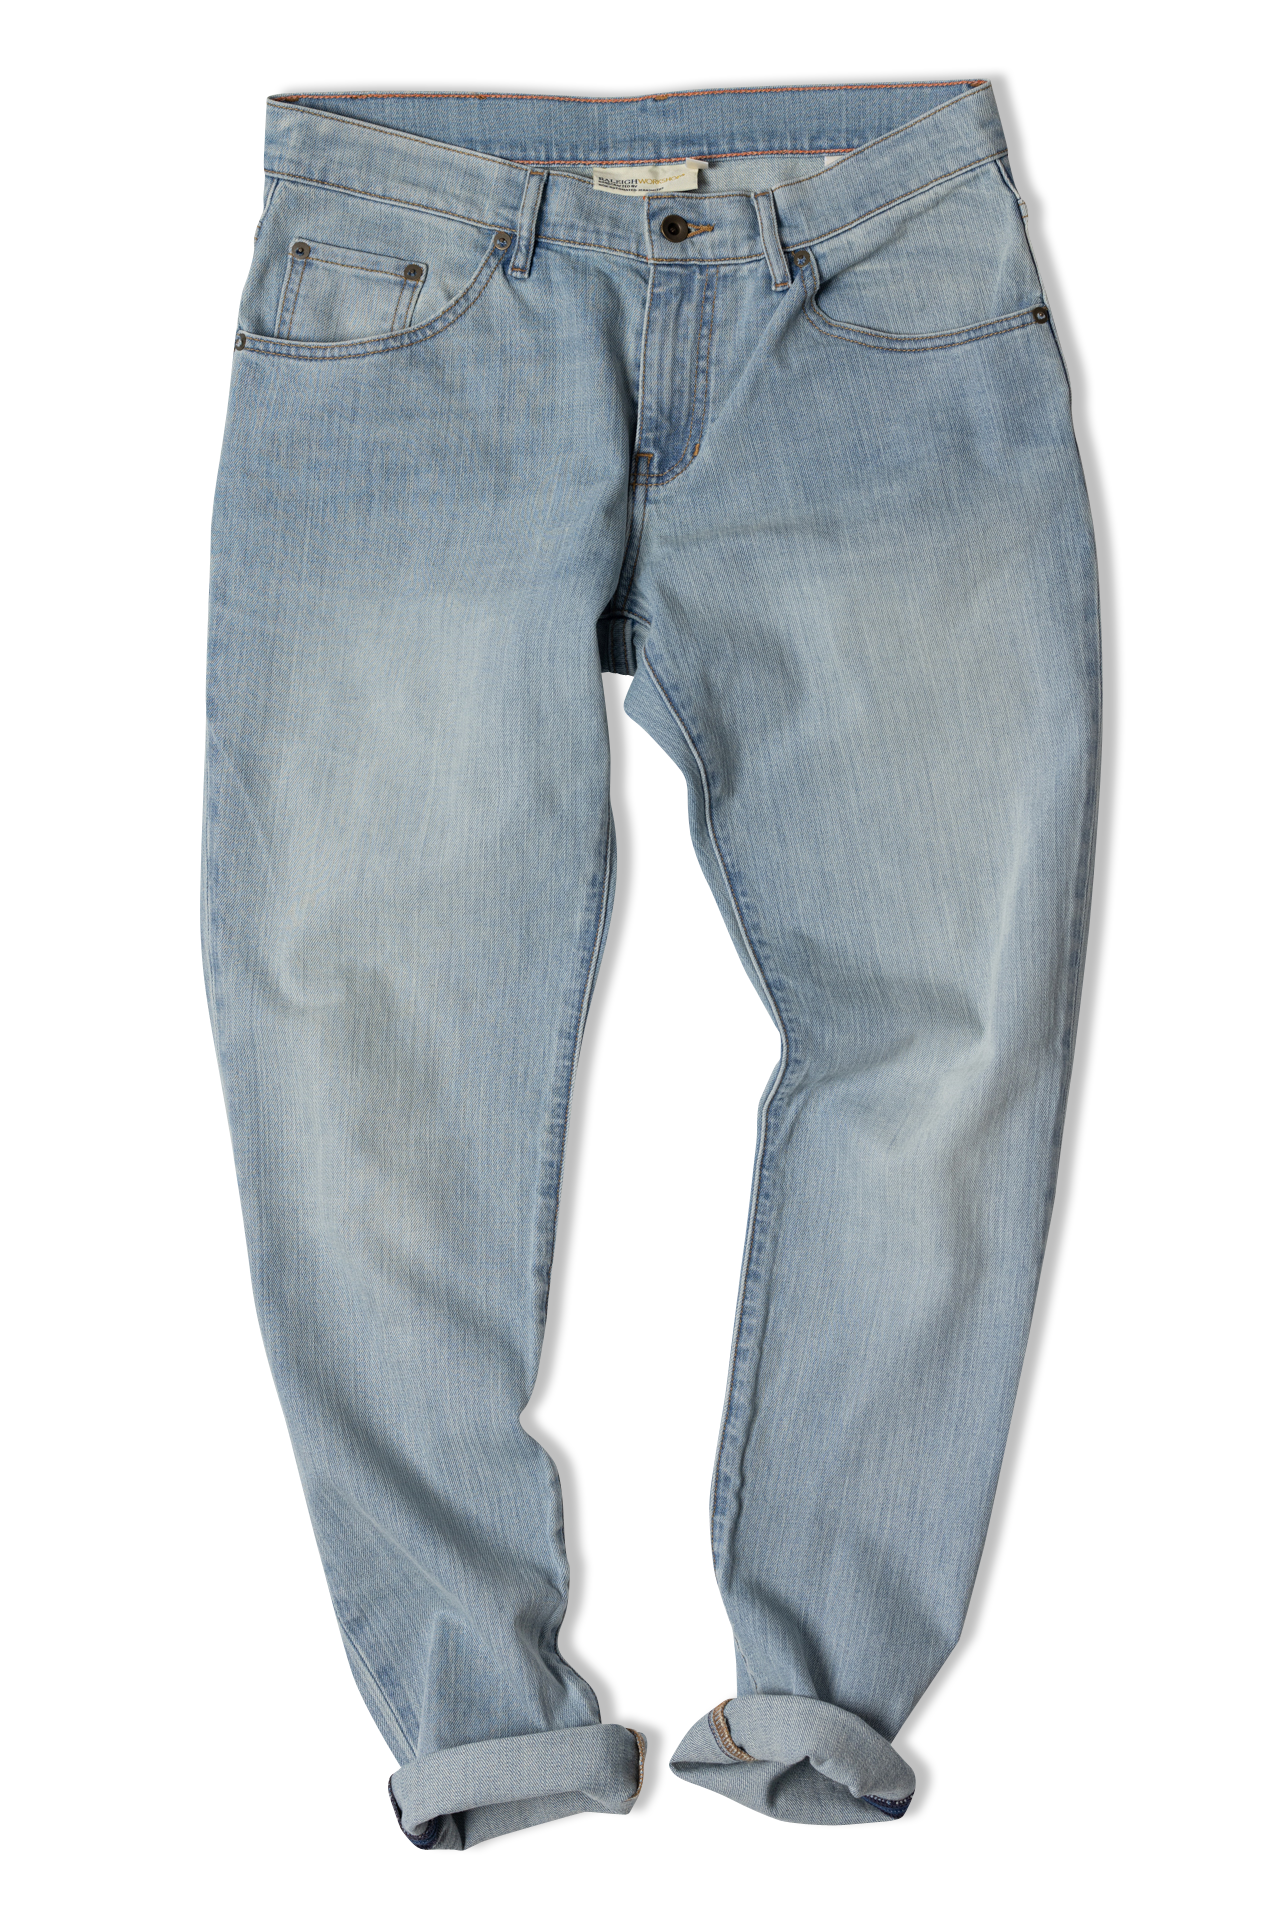 angle: Lookout Man wearing light blue denim jean in Martin Lookout